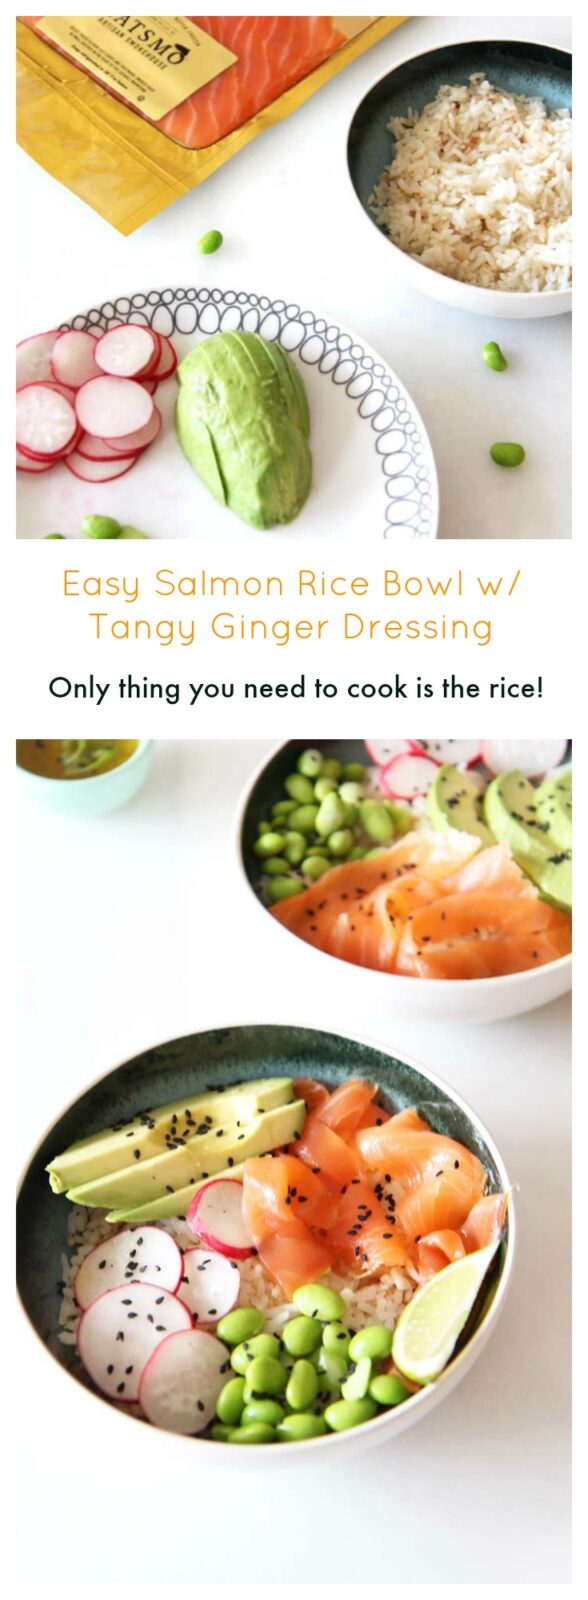 Easy Salmon Rice Bowl Recipe w/ Ginger Dressing. ChopHappy.com